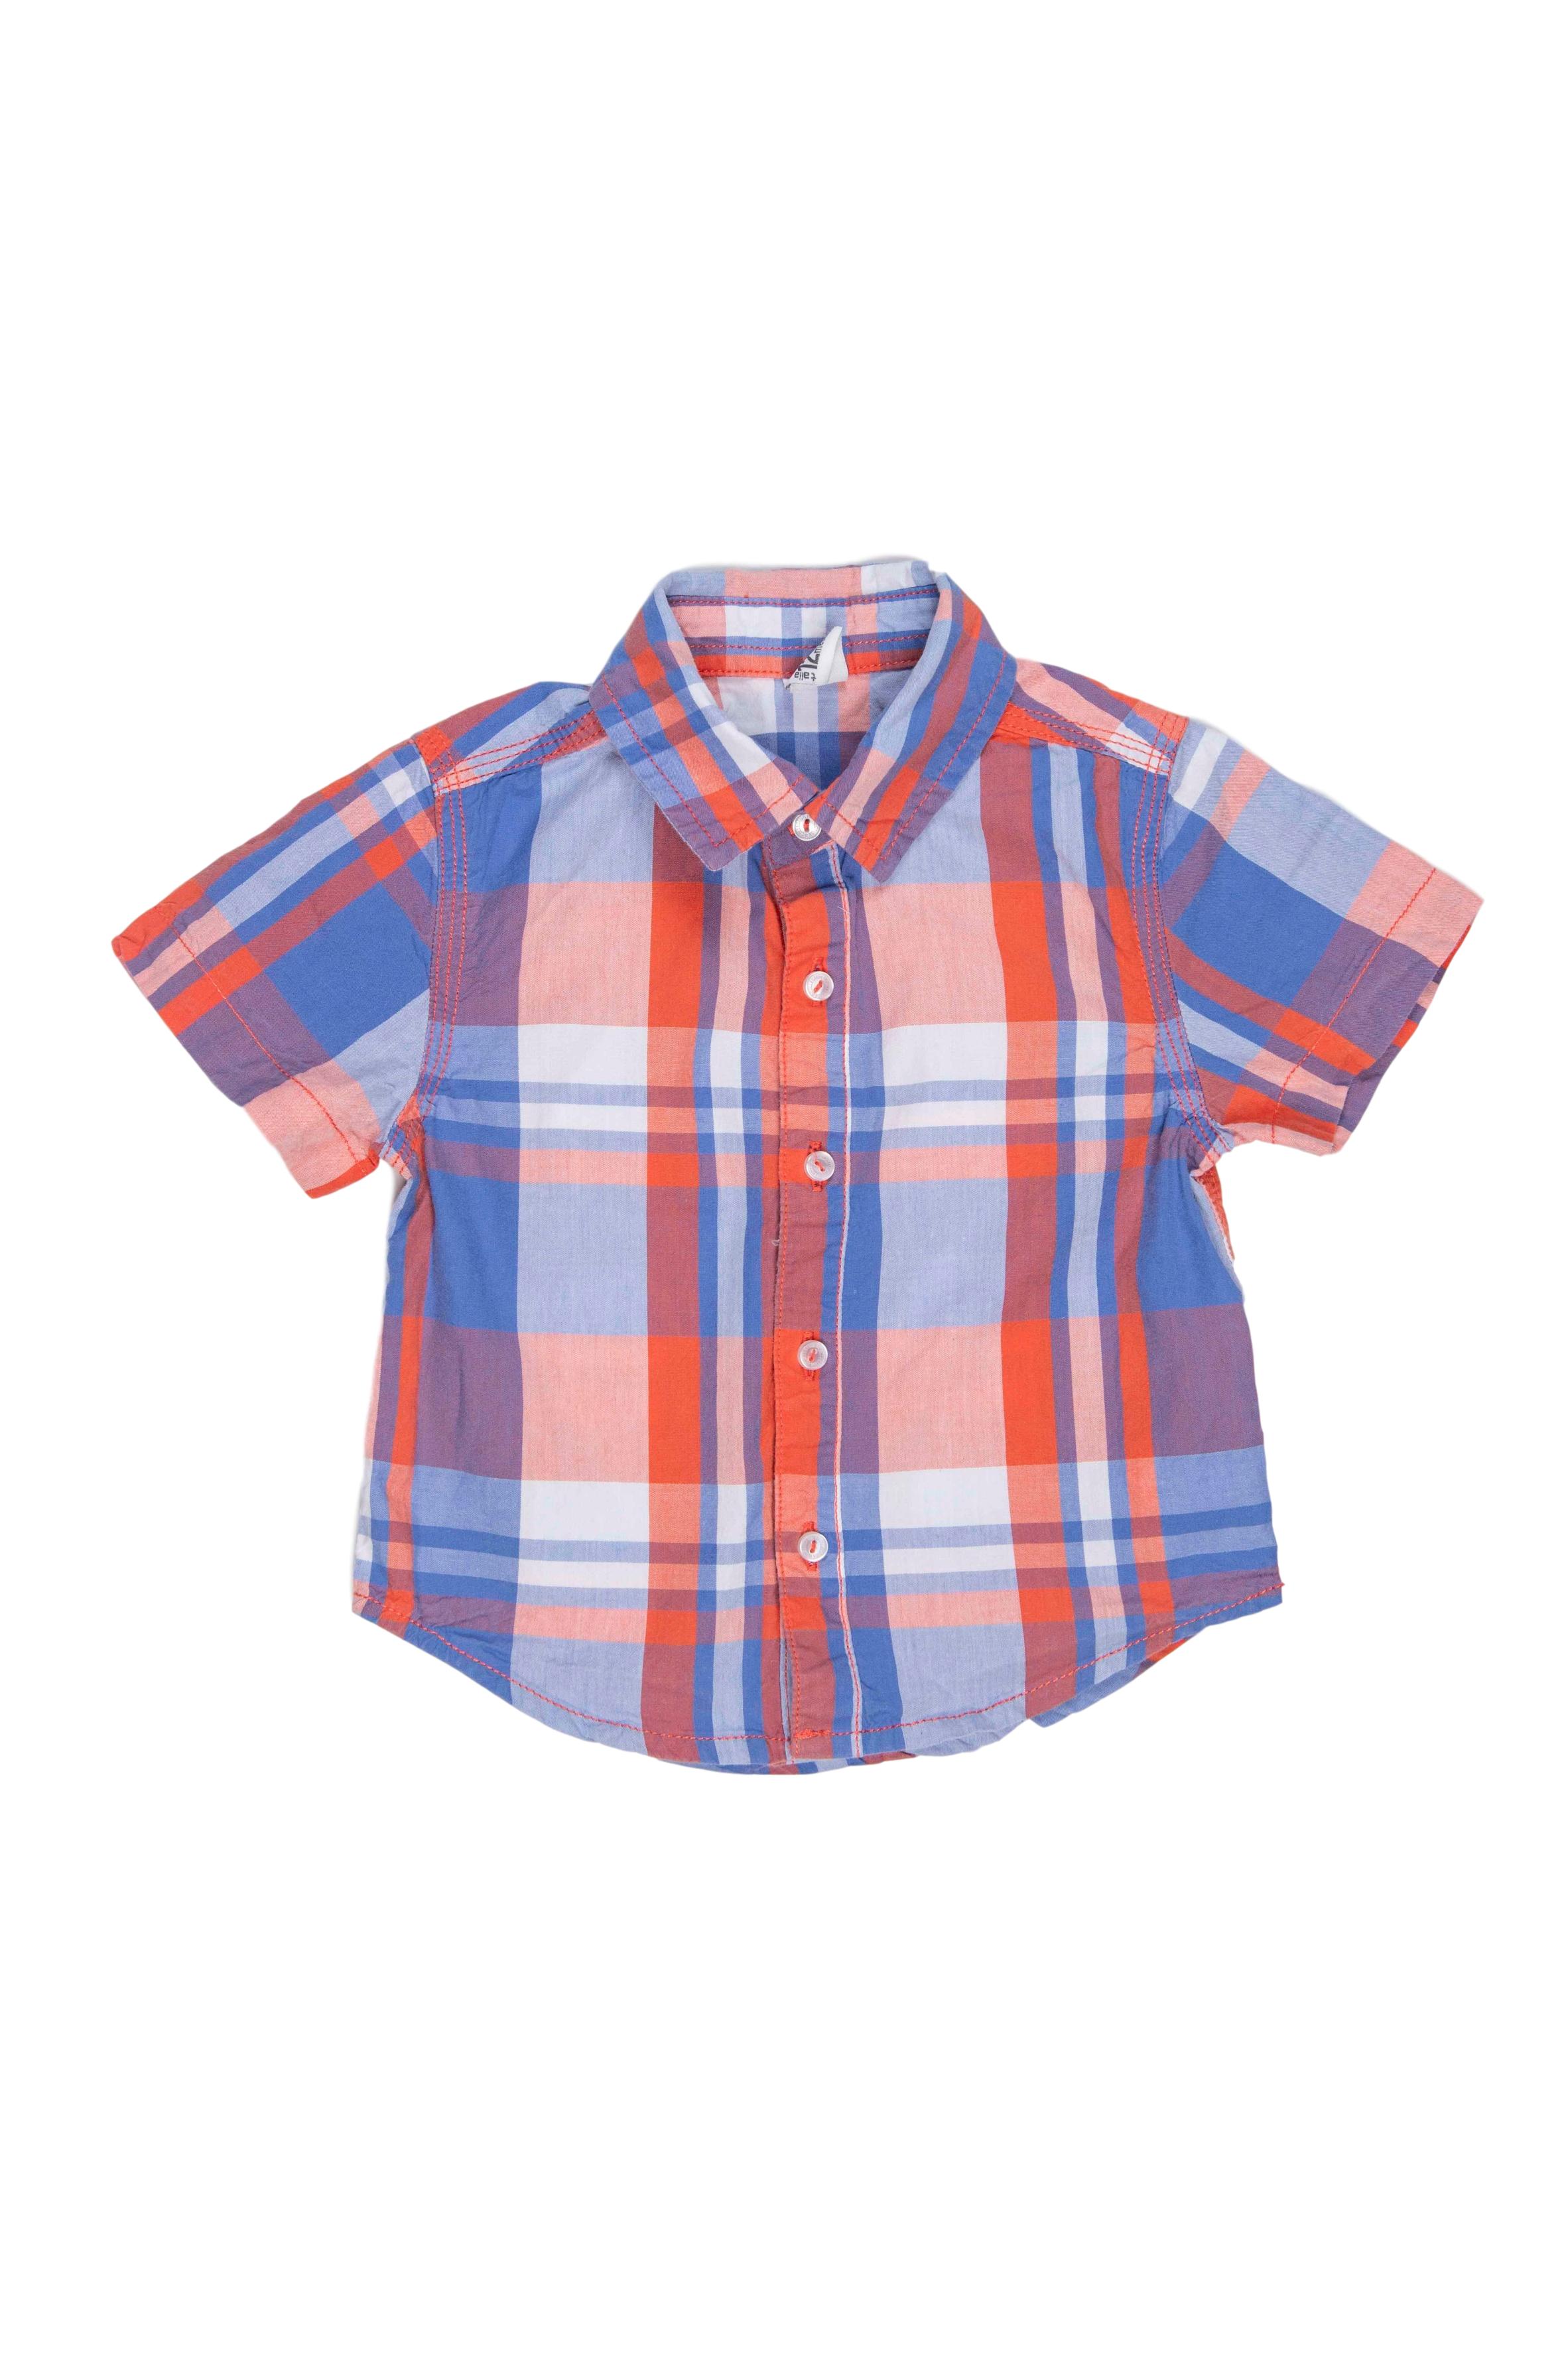 Camisa manga corta cuadros azul y anaranjados, 100% algodón - Yamp